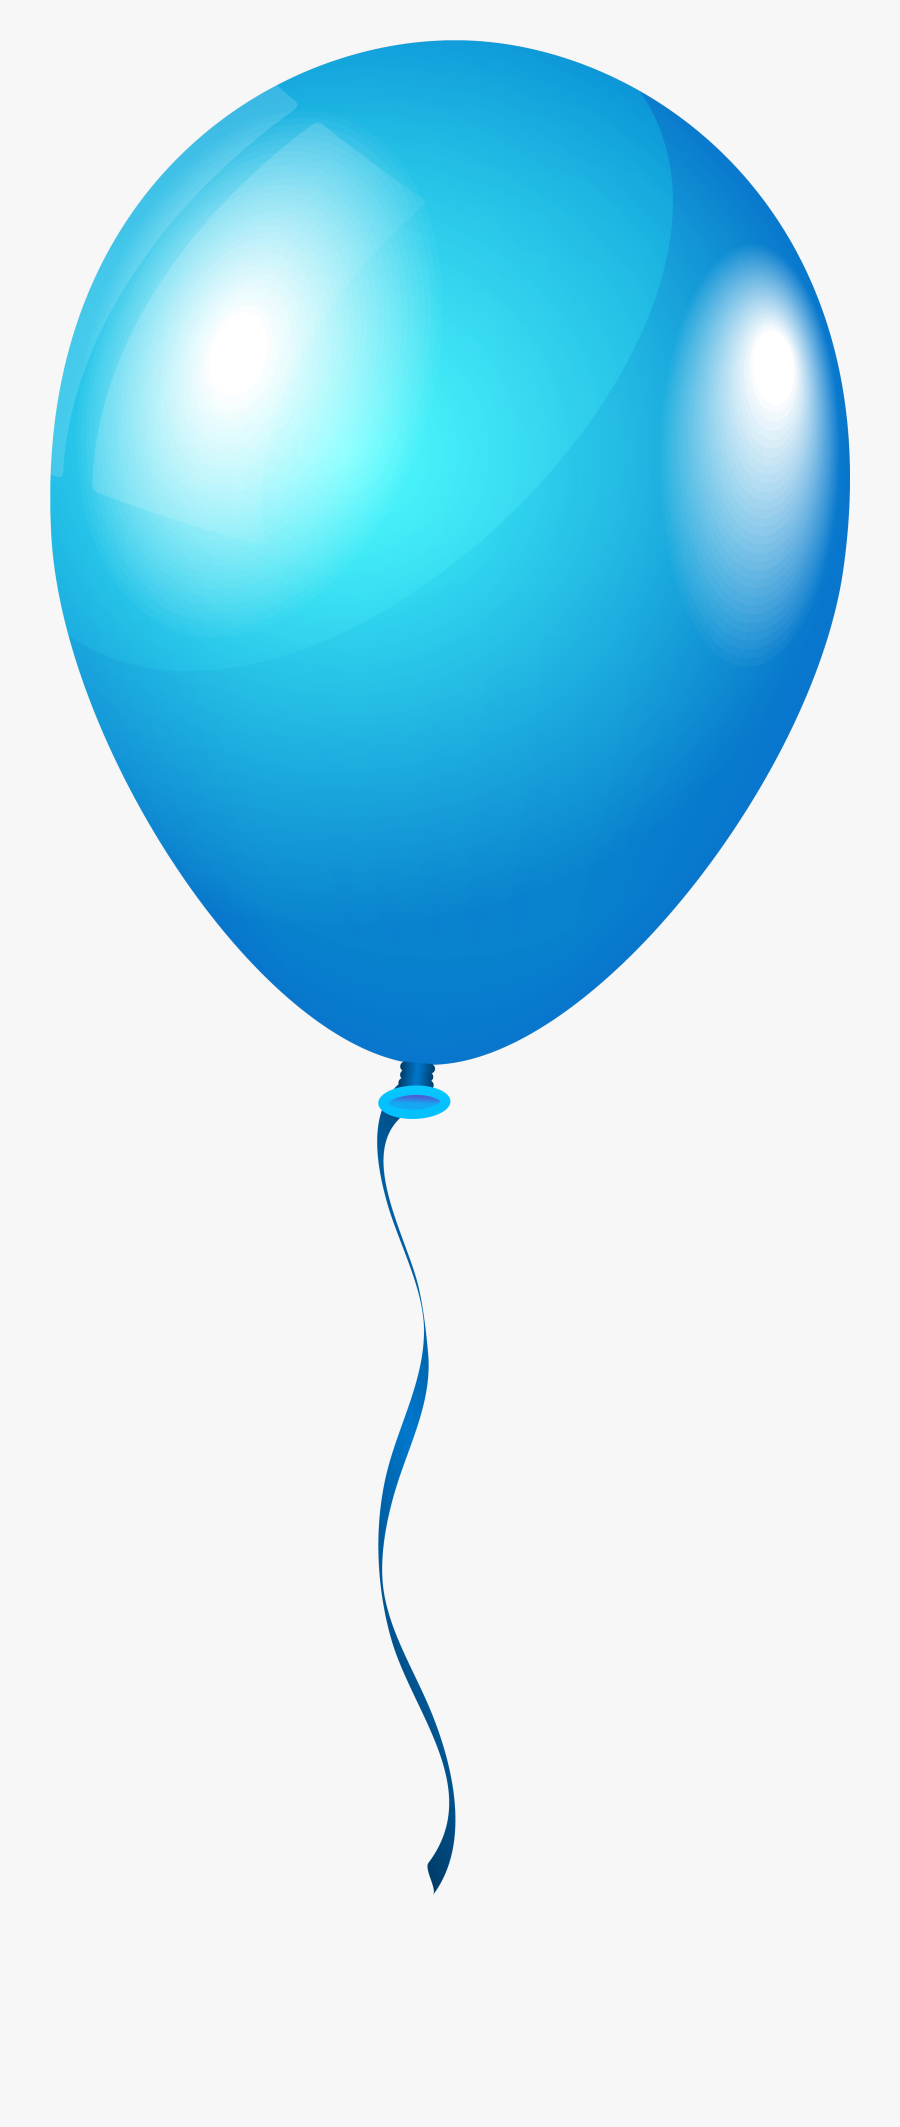 Single Blueballoon Png Clipart Image - Blue Balloon Transparent Background, Transparent Clipart